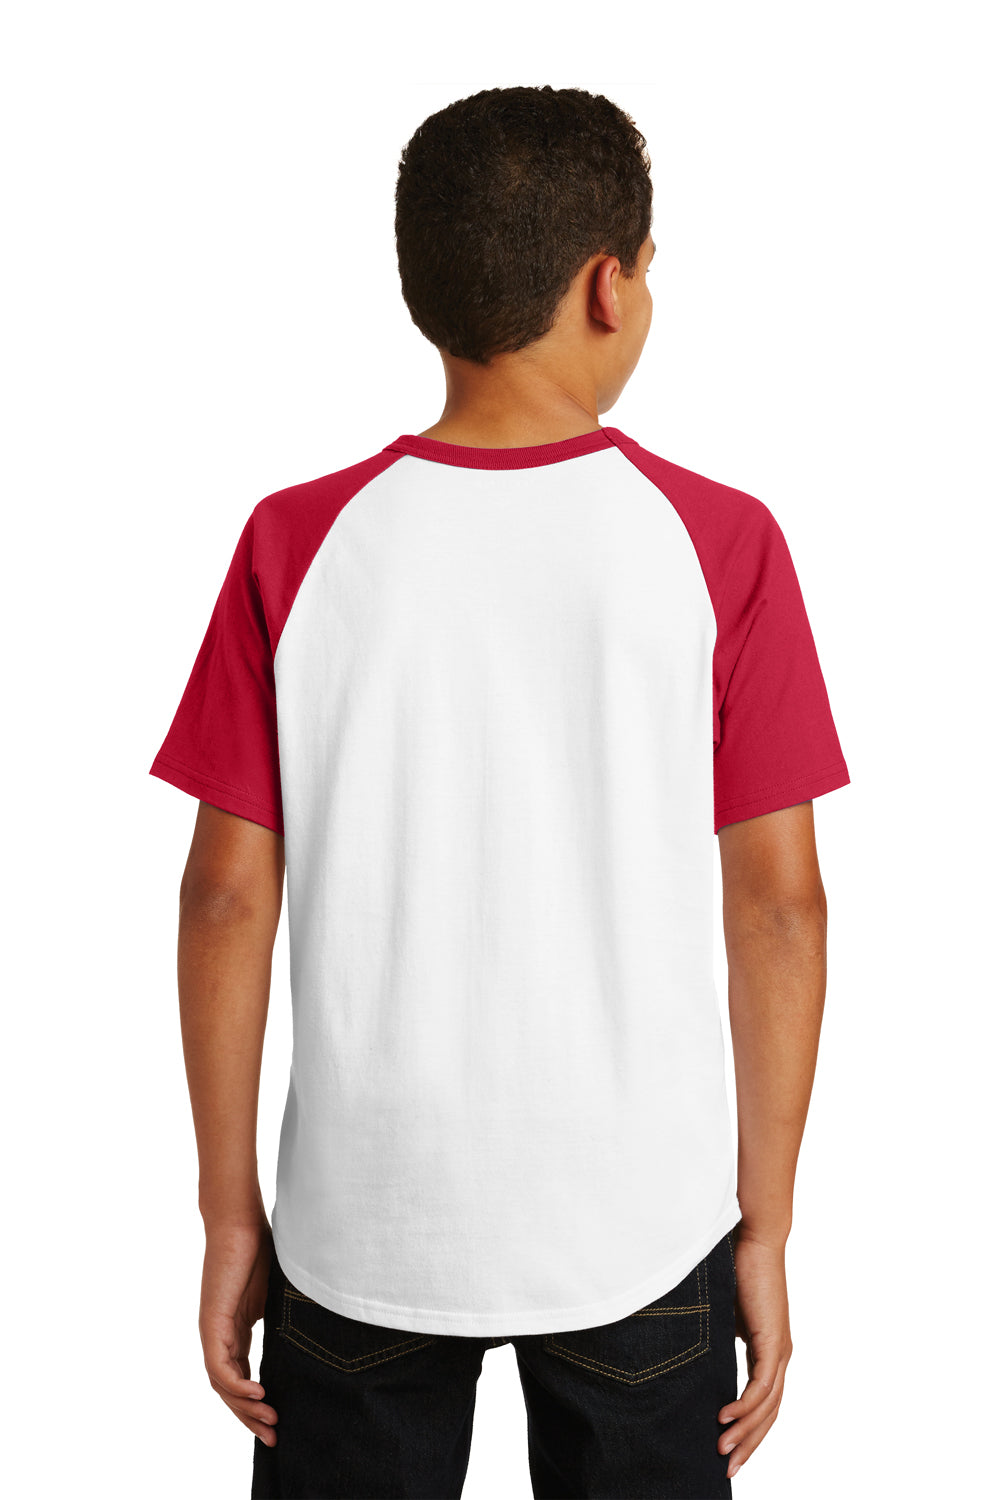 Sport-Tek YT201 Youth Short Sleeve Crewneck T-Shirt White/Red Back